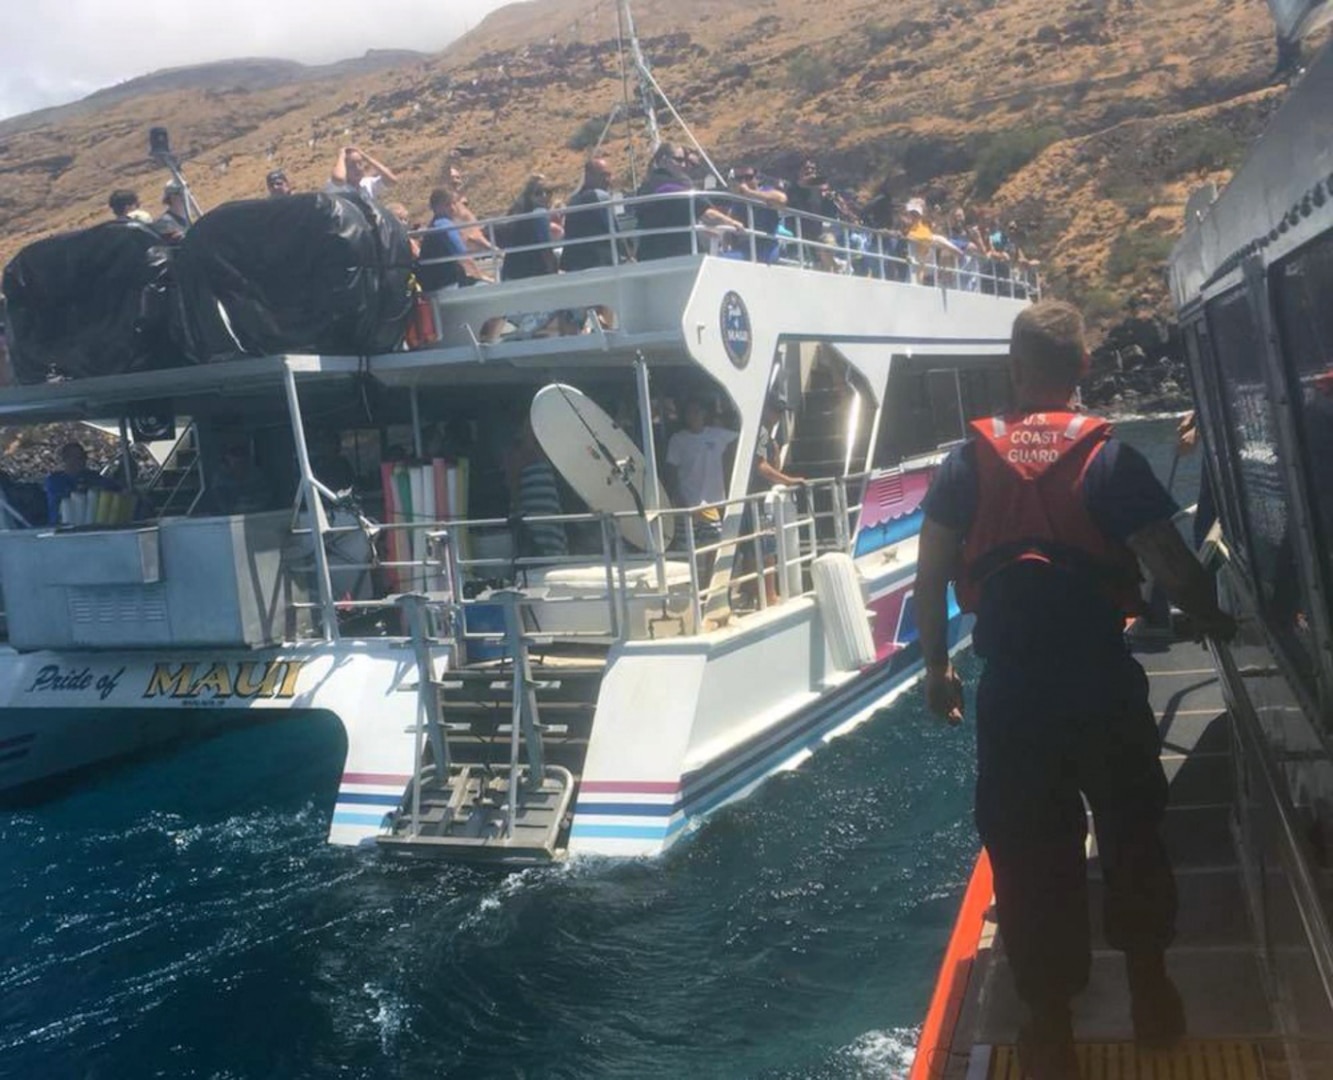 Coast Guard, partners rescue surfer in distress off Maui